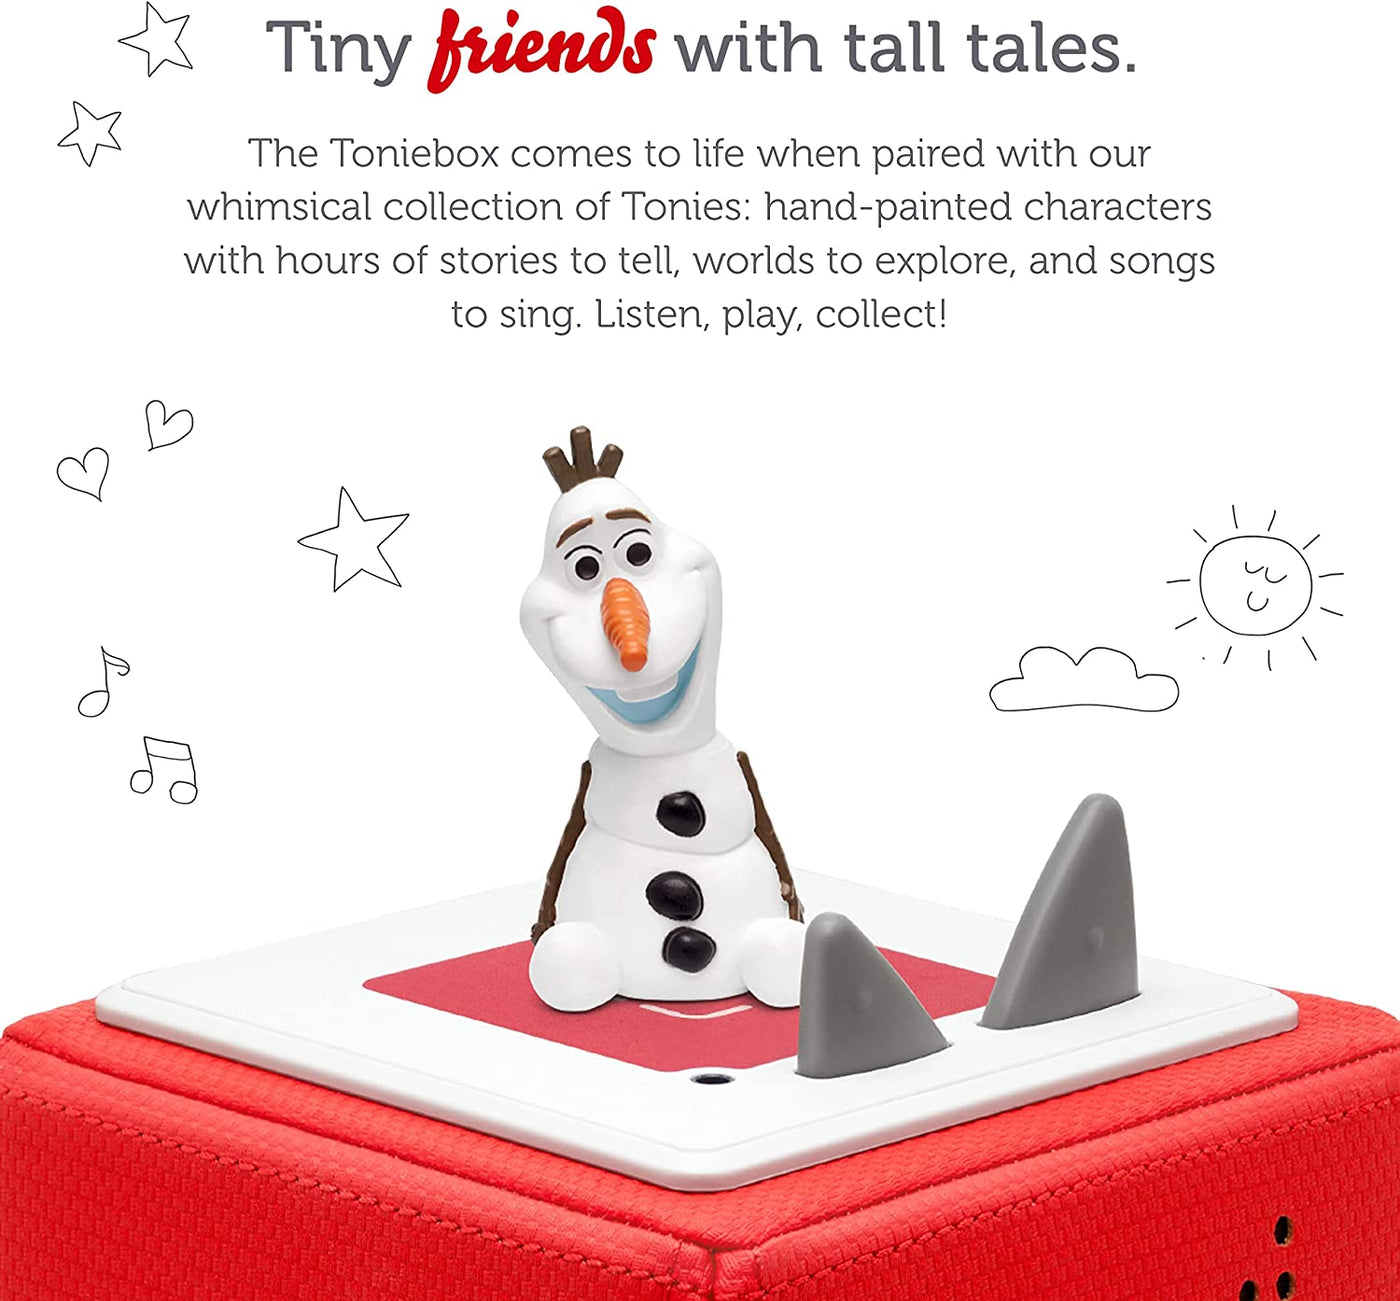 Tonies Disney Audio Play Character: Olaf - Frozen